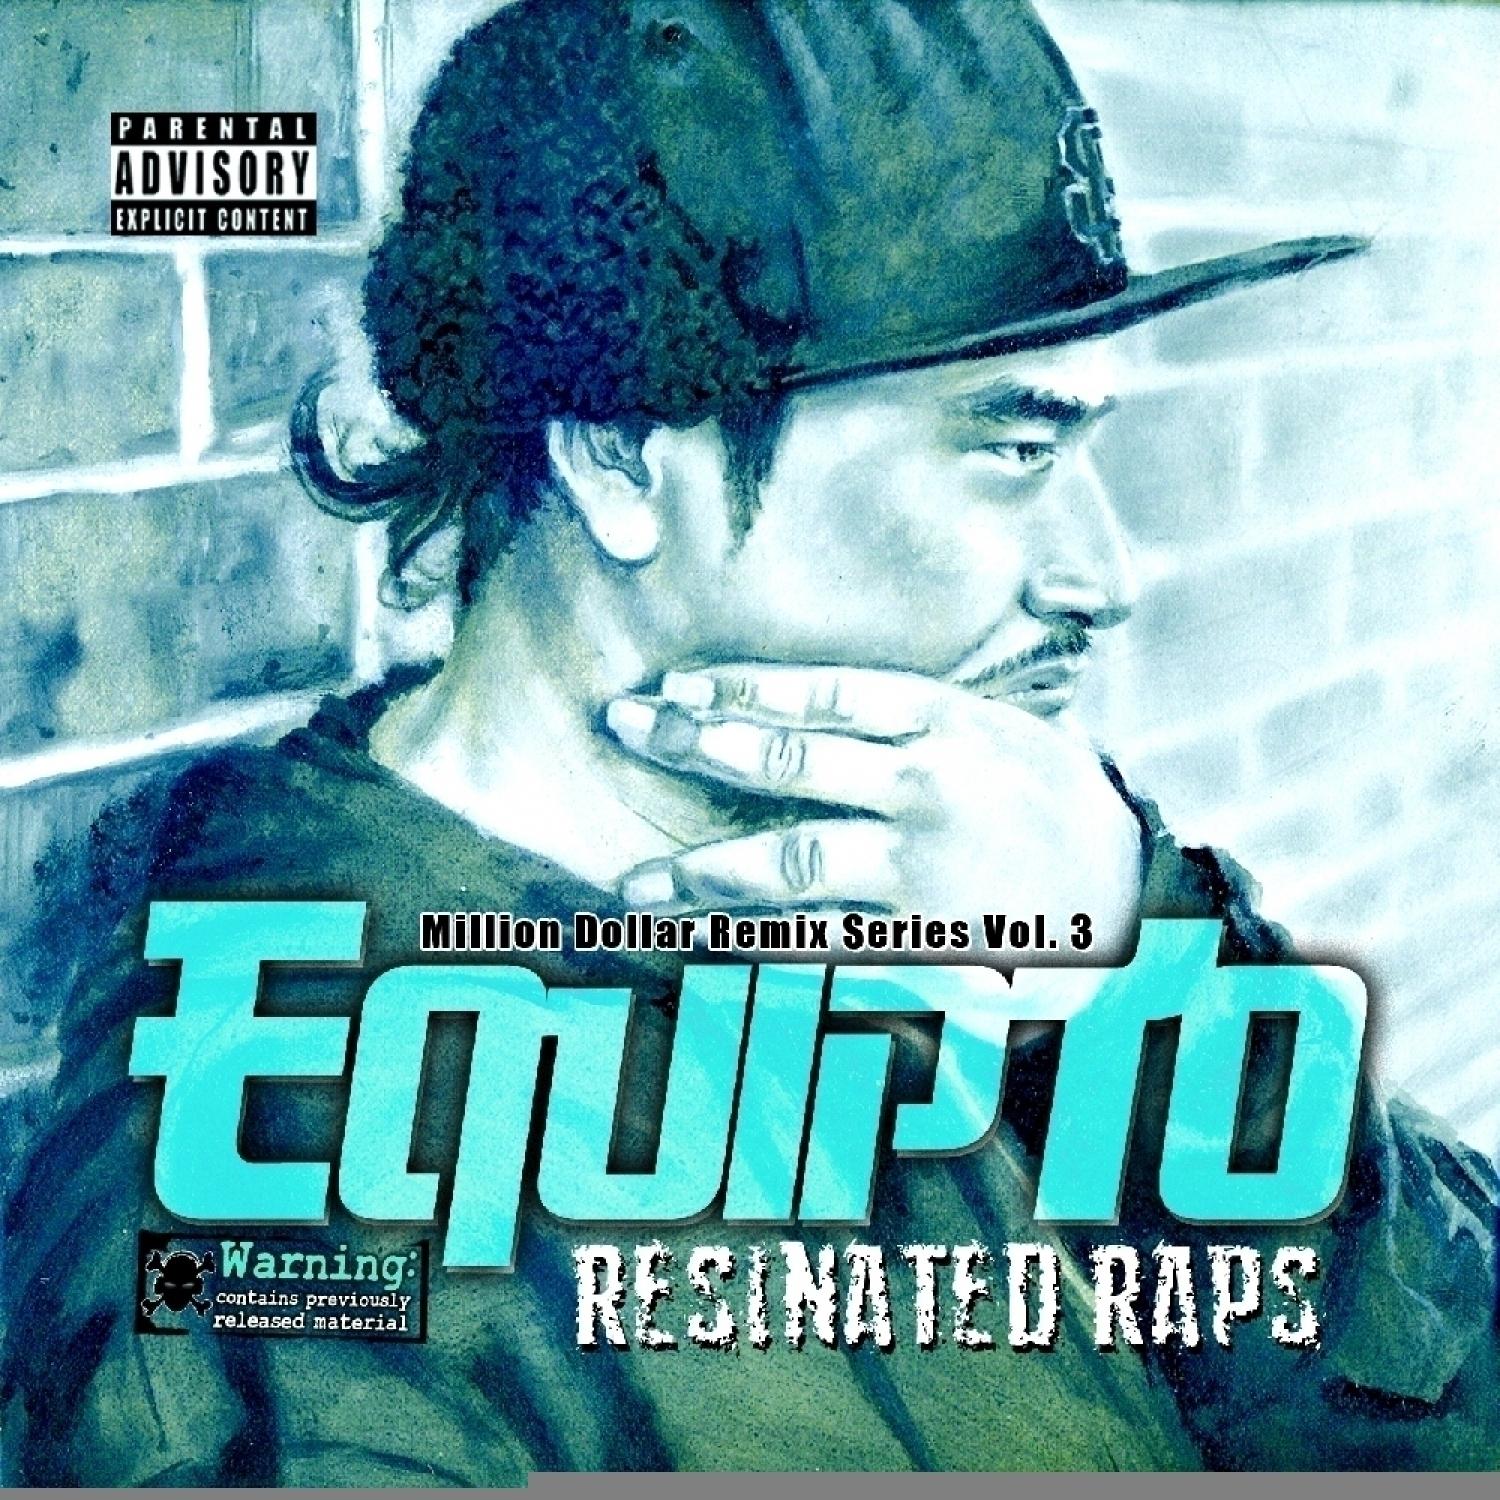 Resinated Raps - Million Dollar Remix Series Vol. 3